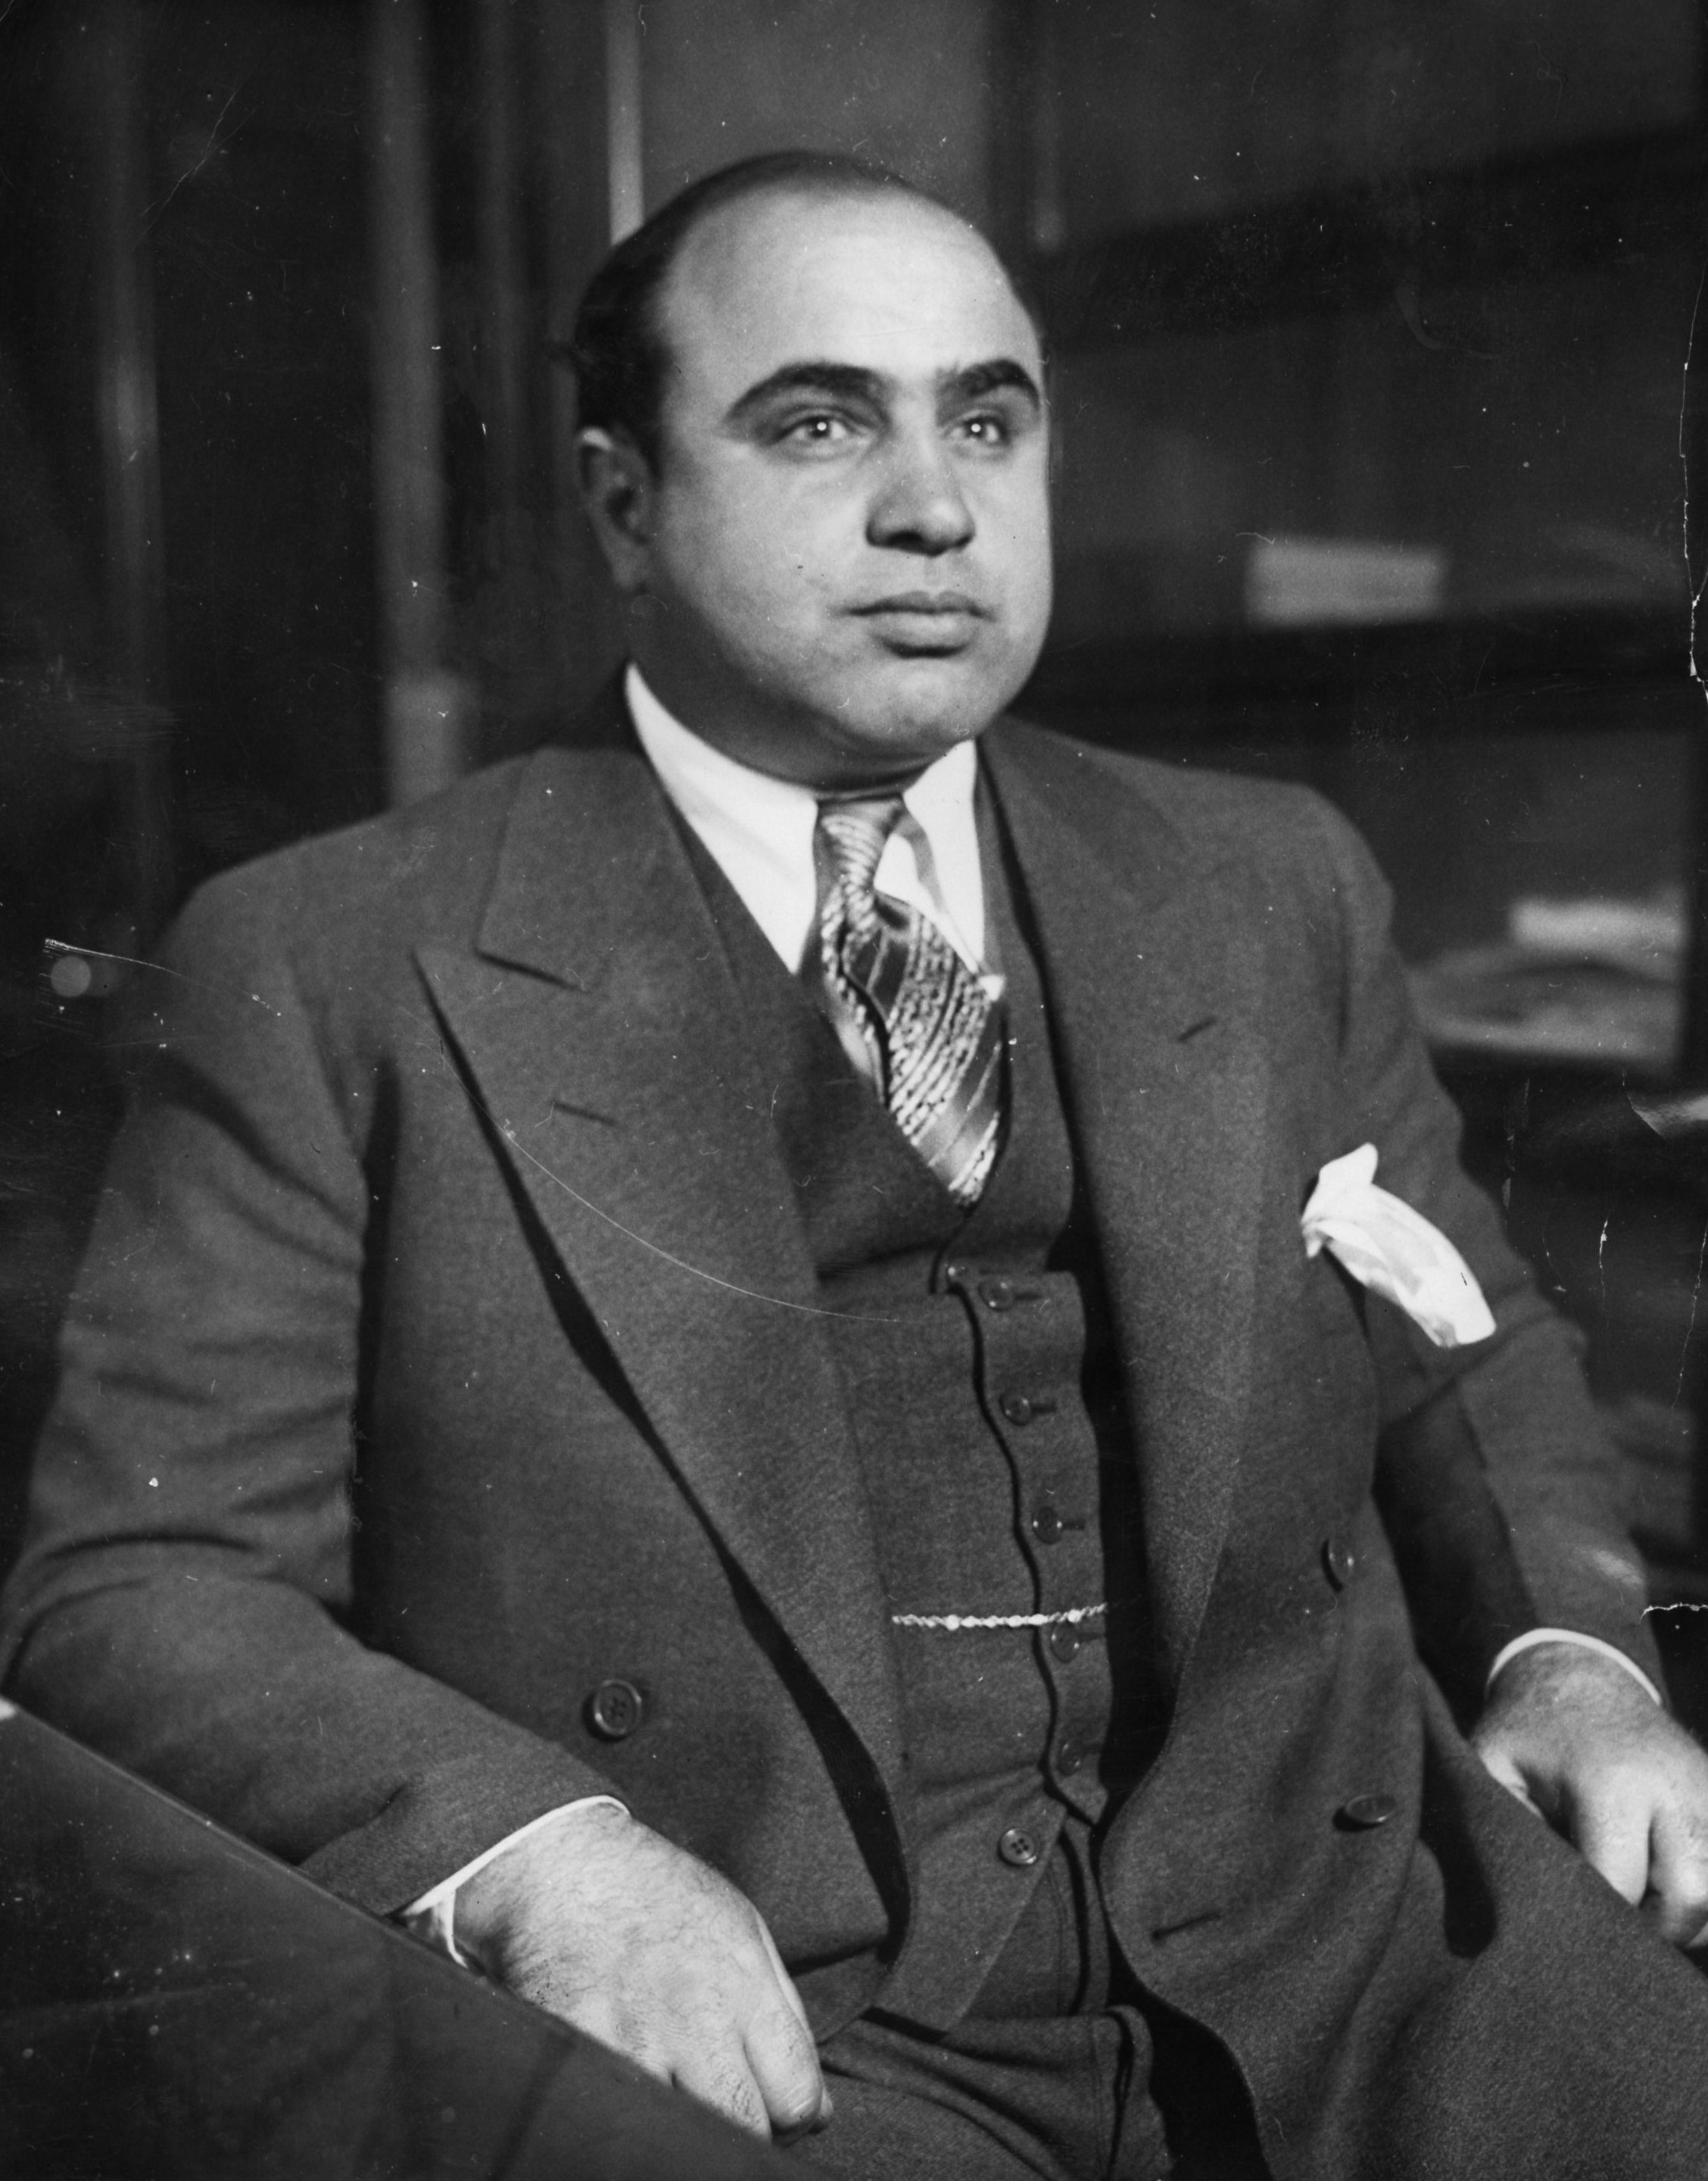 AI Capone in 1931